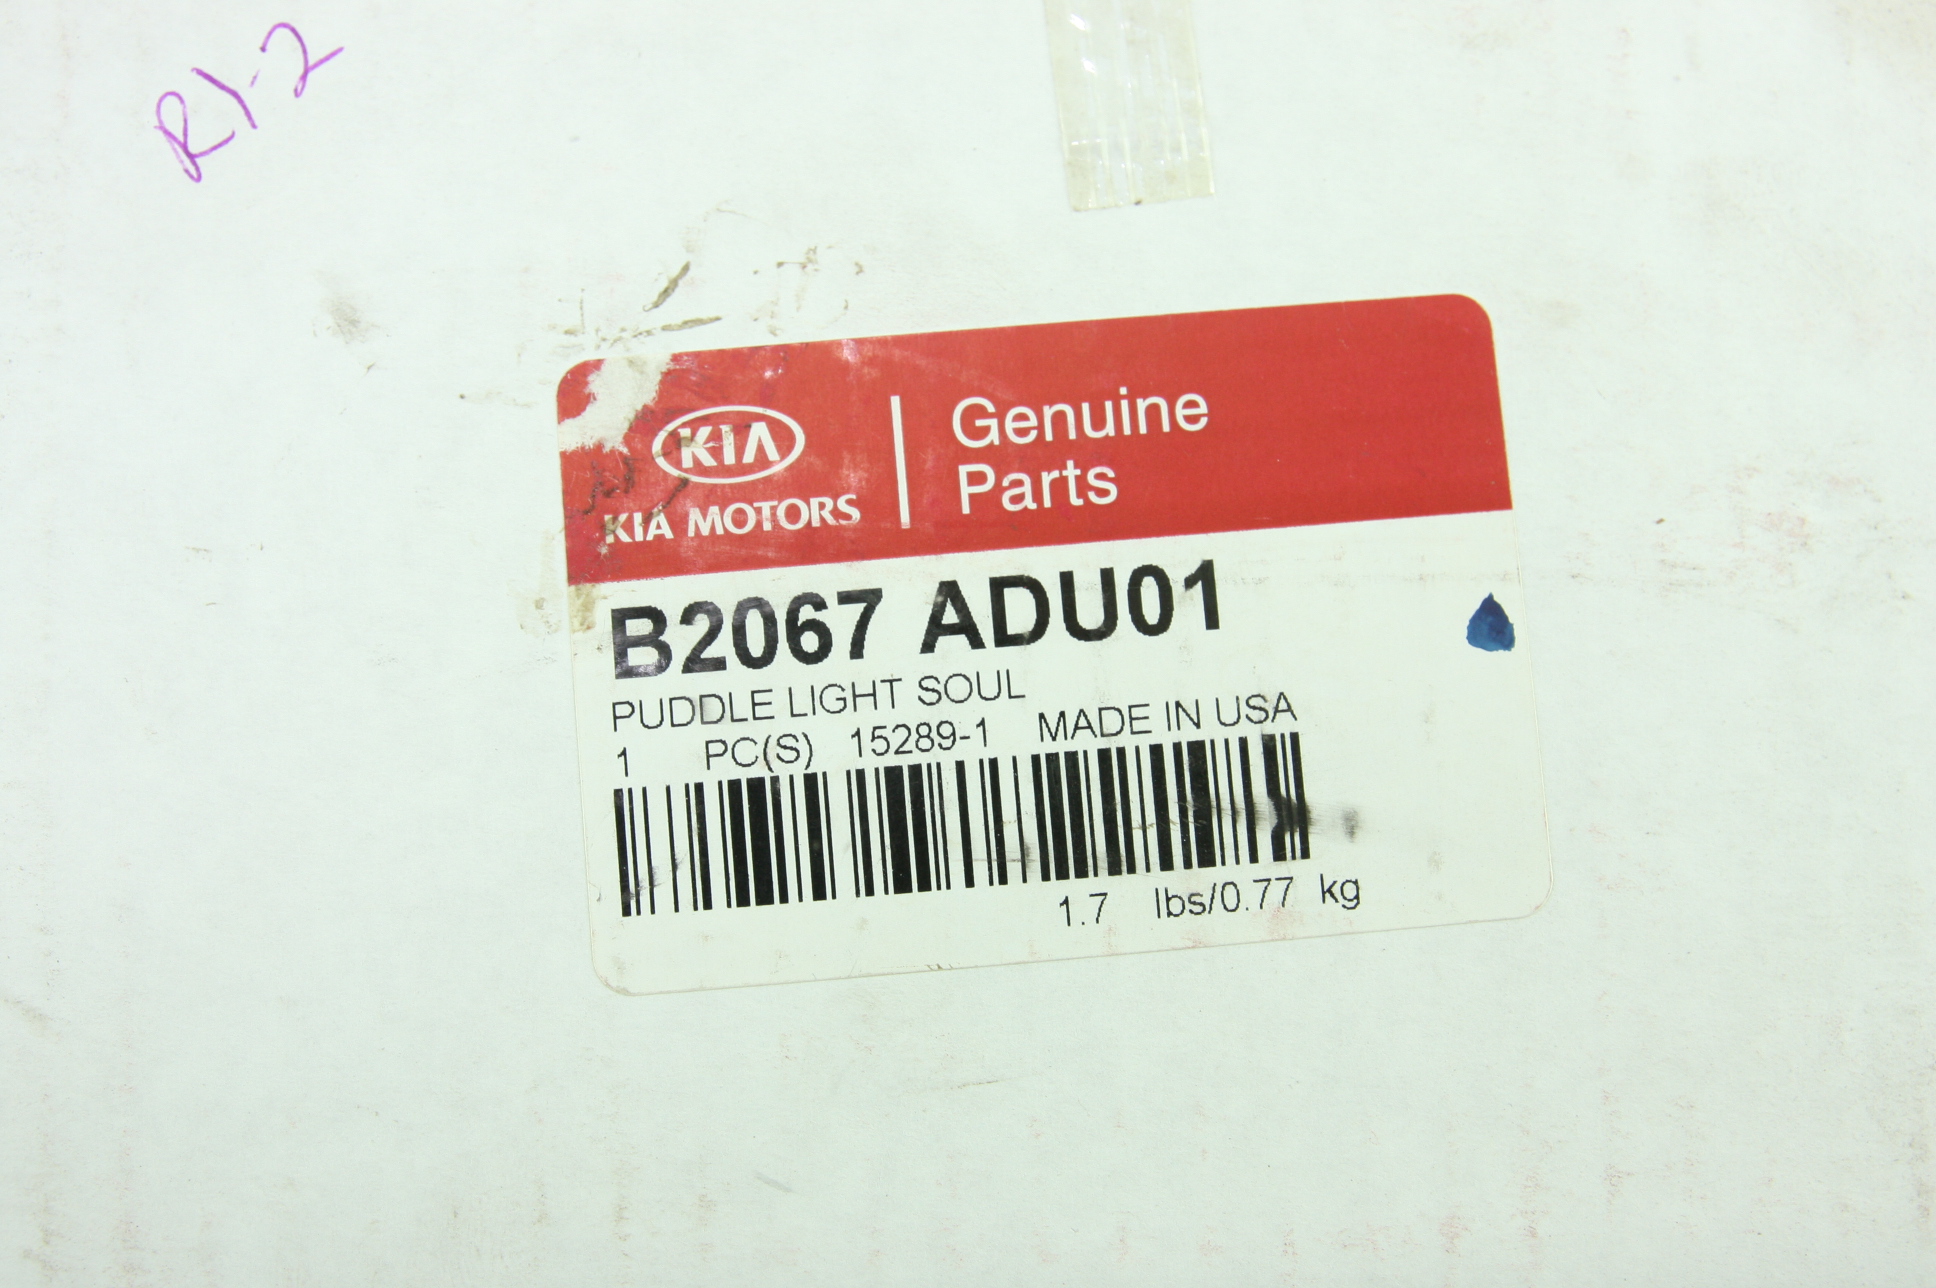 ** Genuine Kia 14-19 Soul Exterior LED Lighting Kit New OEM Packaging B2067ADU01 - image 2